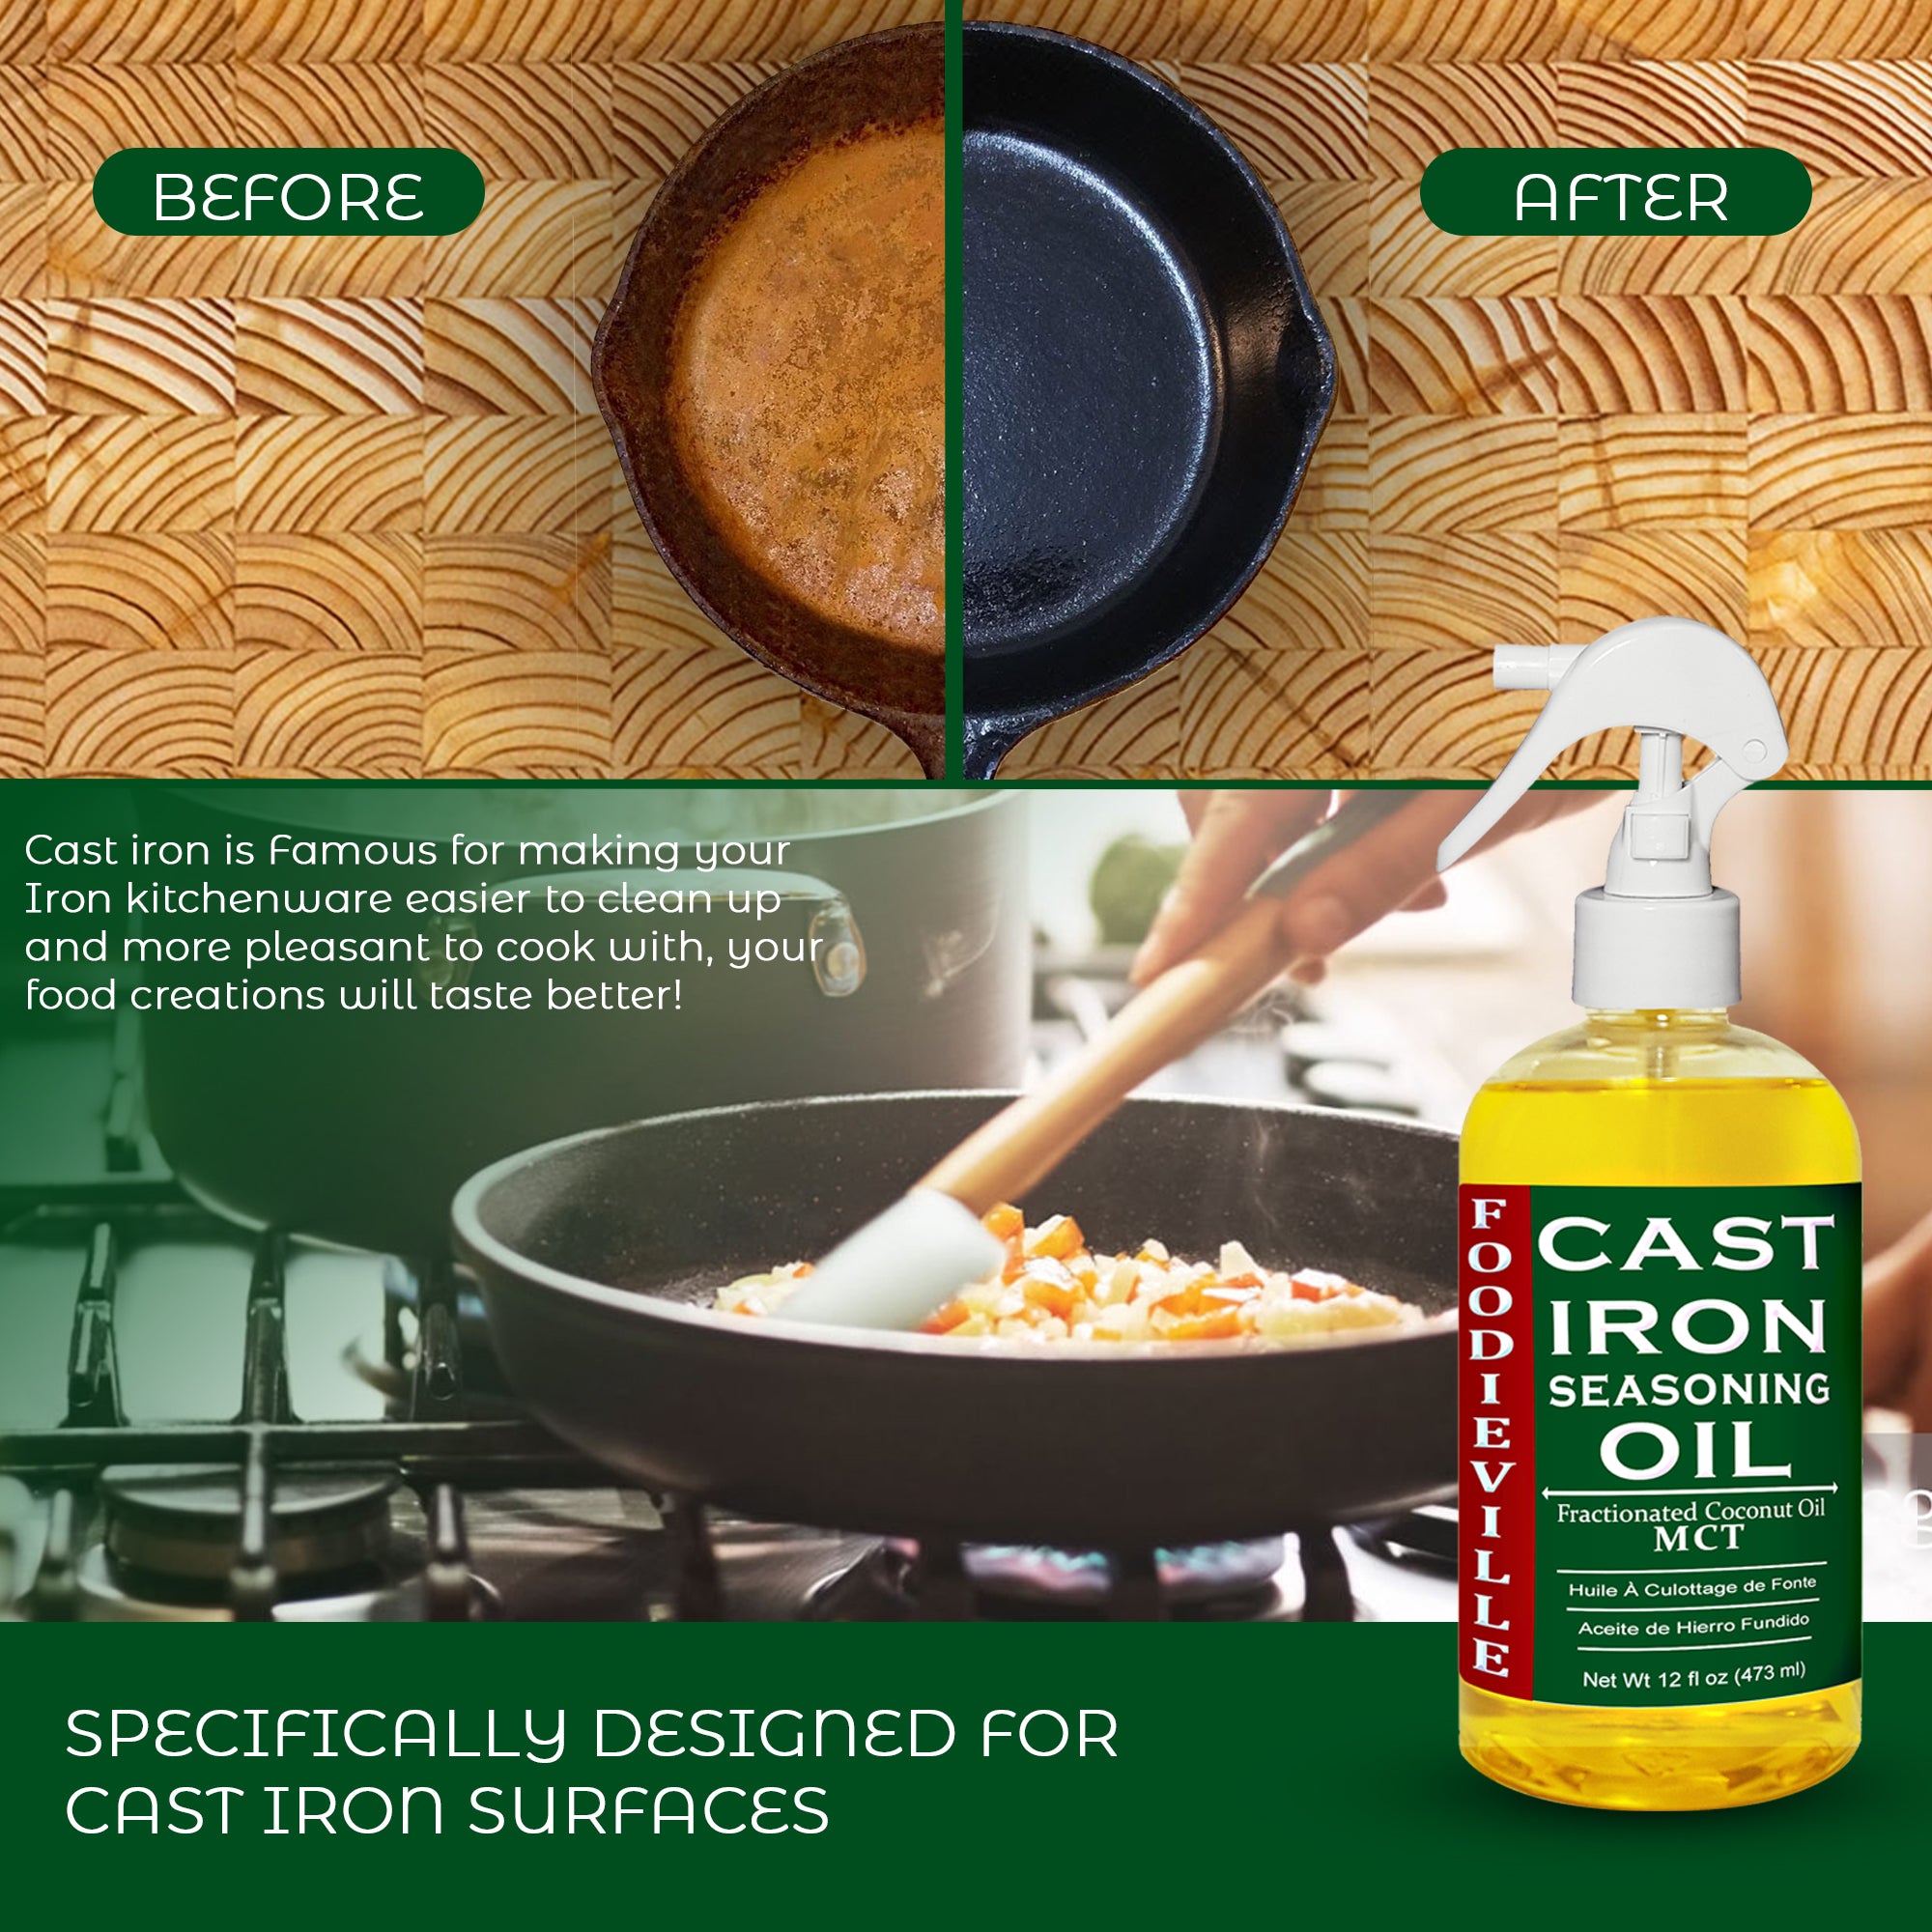 MI Cast Iron Oil – MI Wood Oil